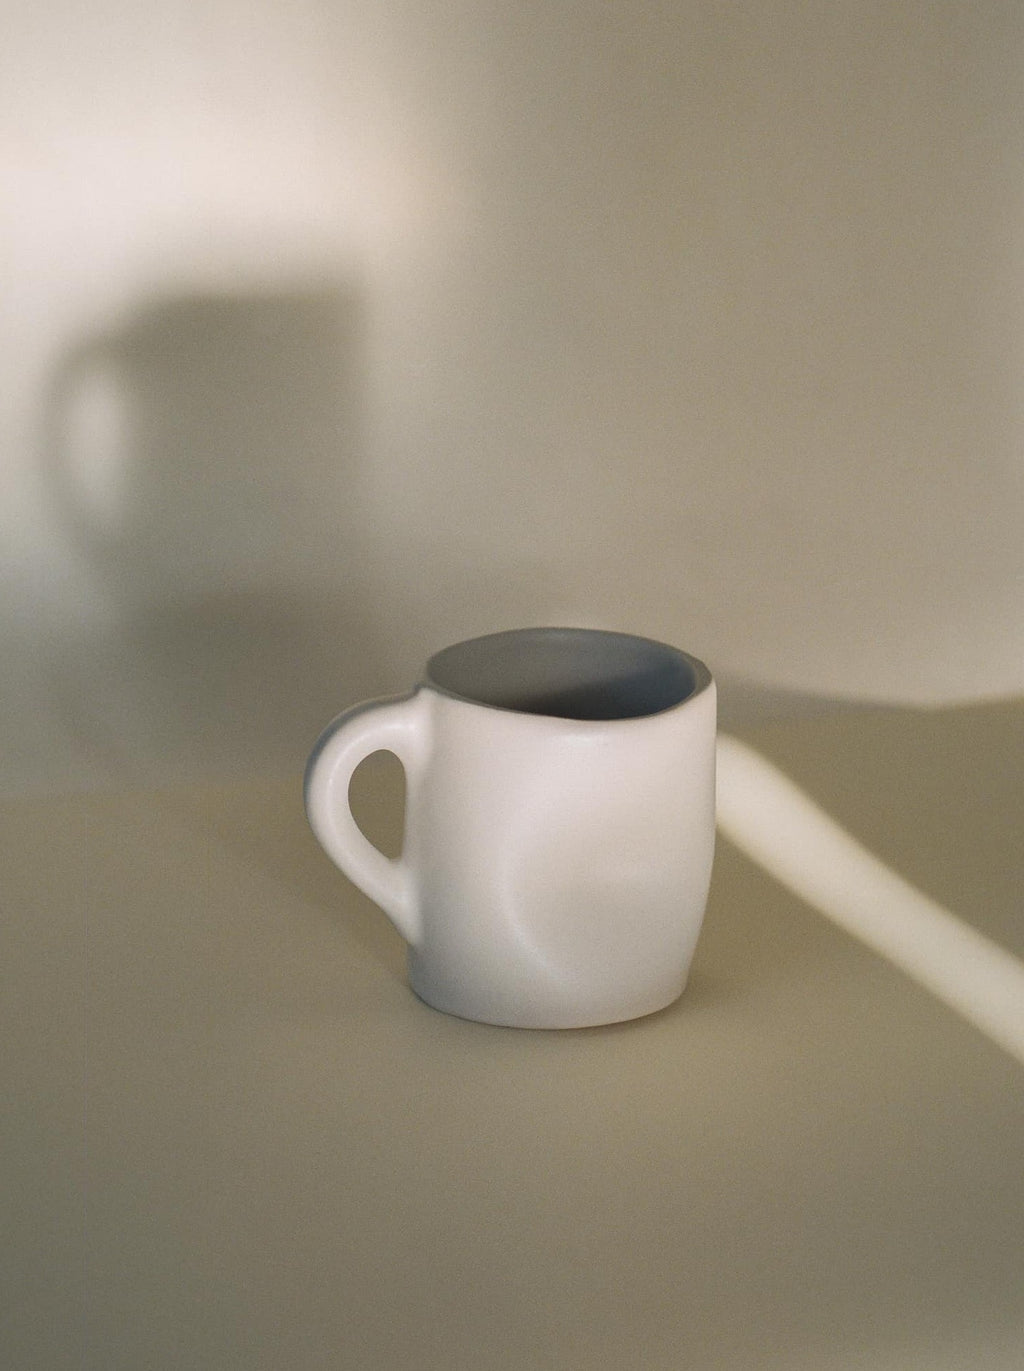 sculpted white ceramic mug